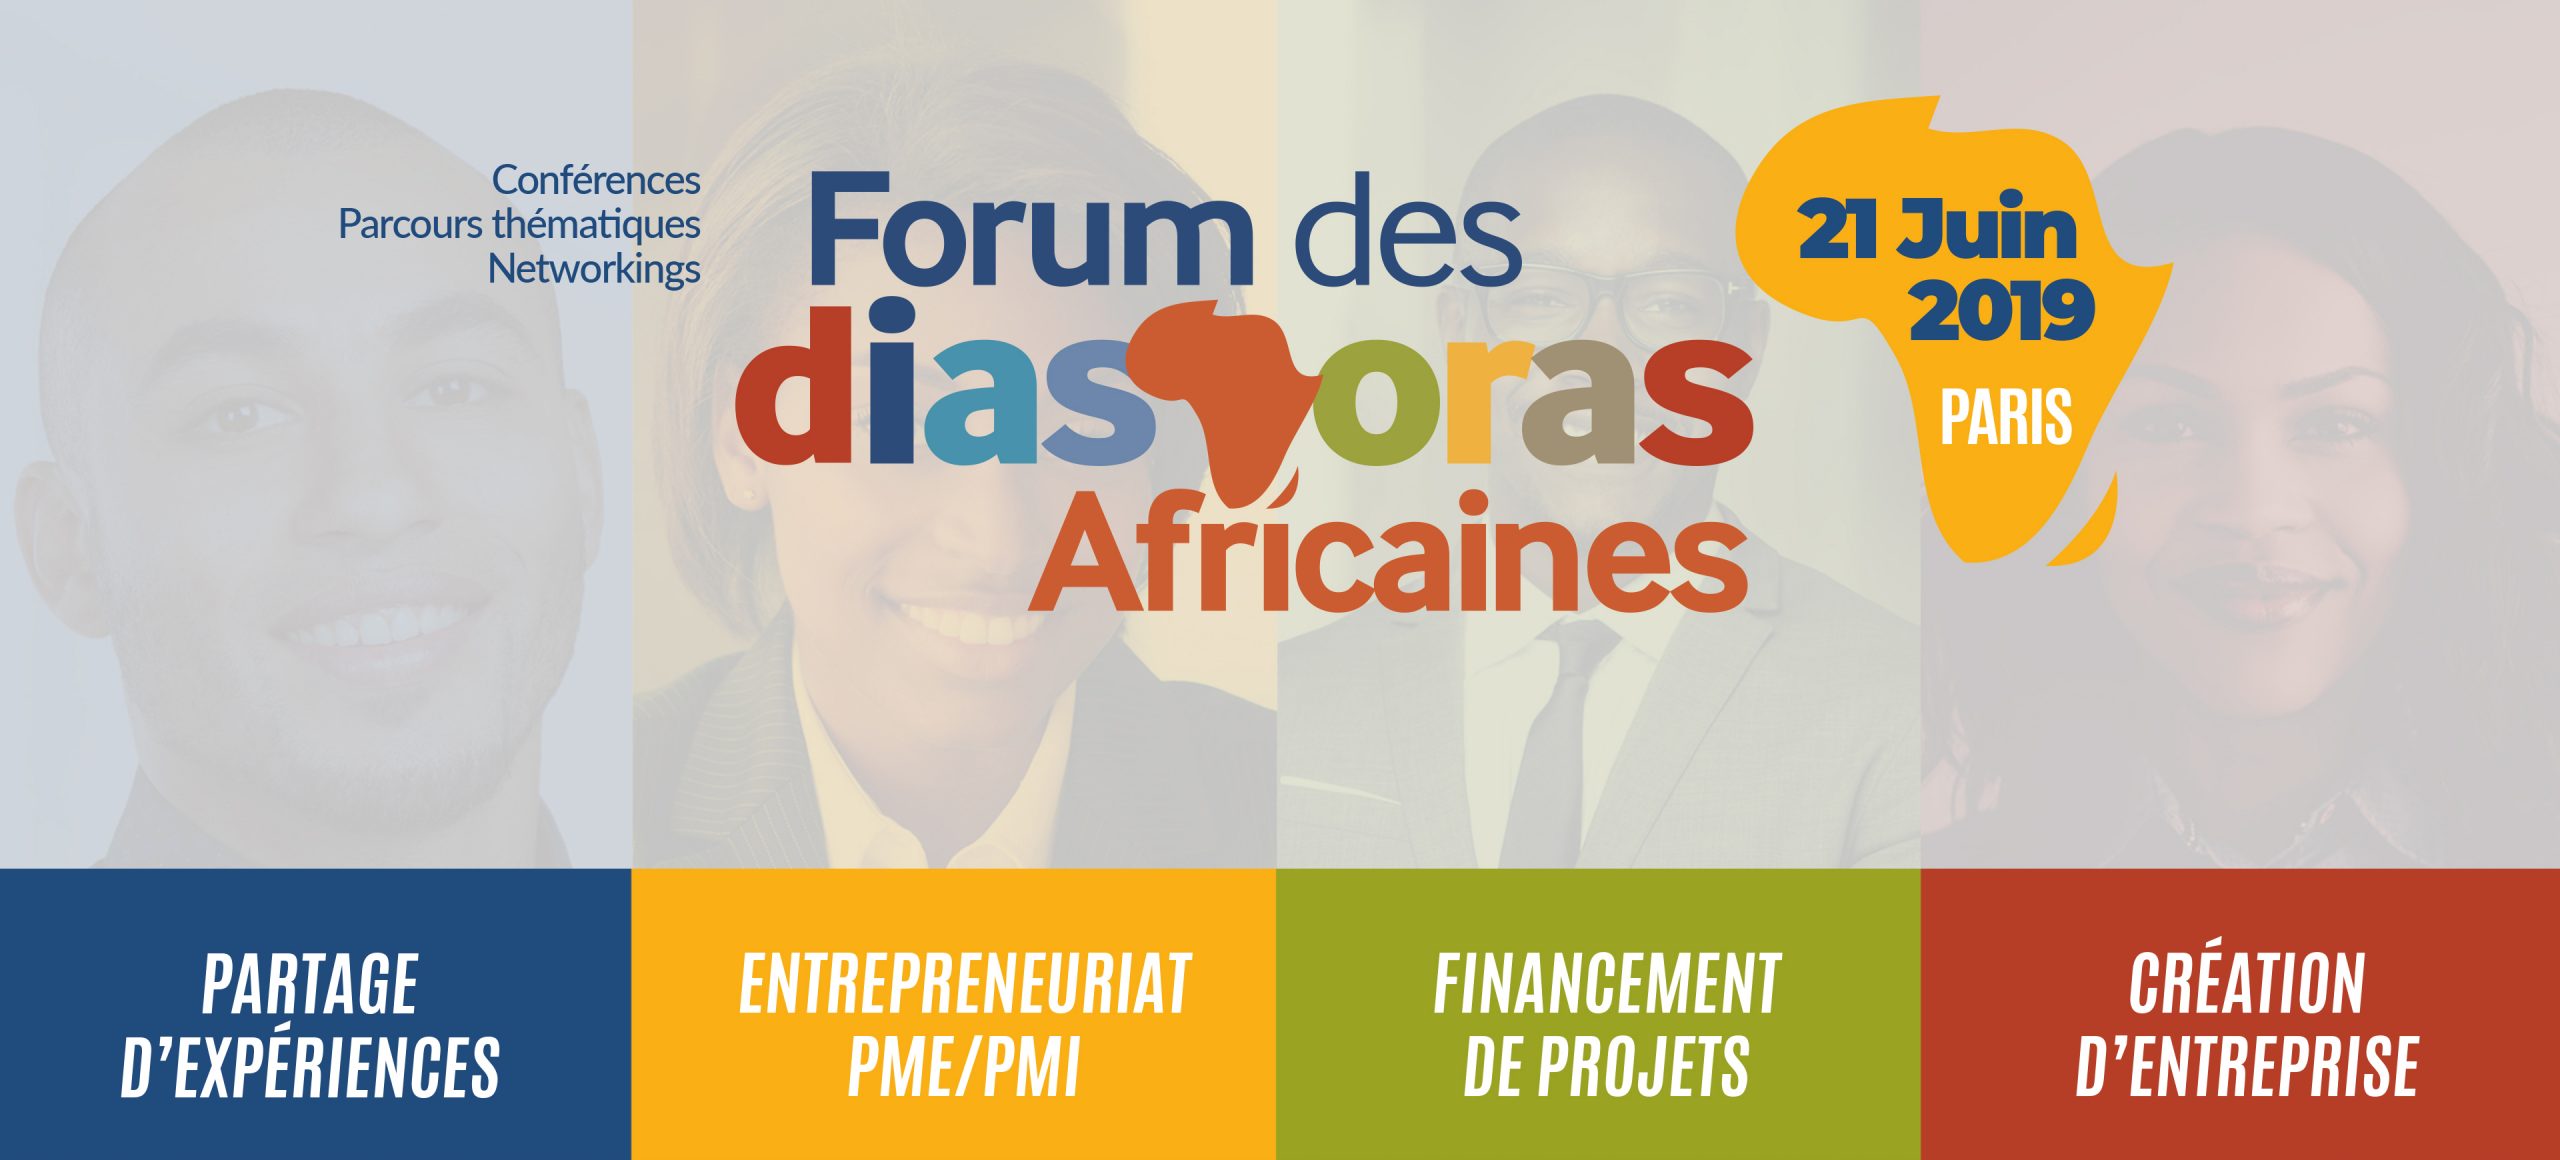 Forum des diaporas Africaines